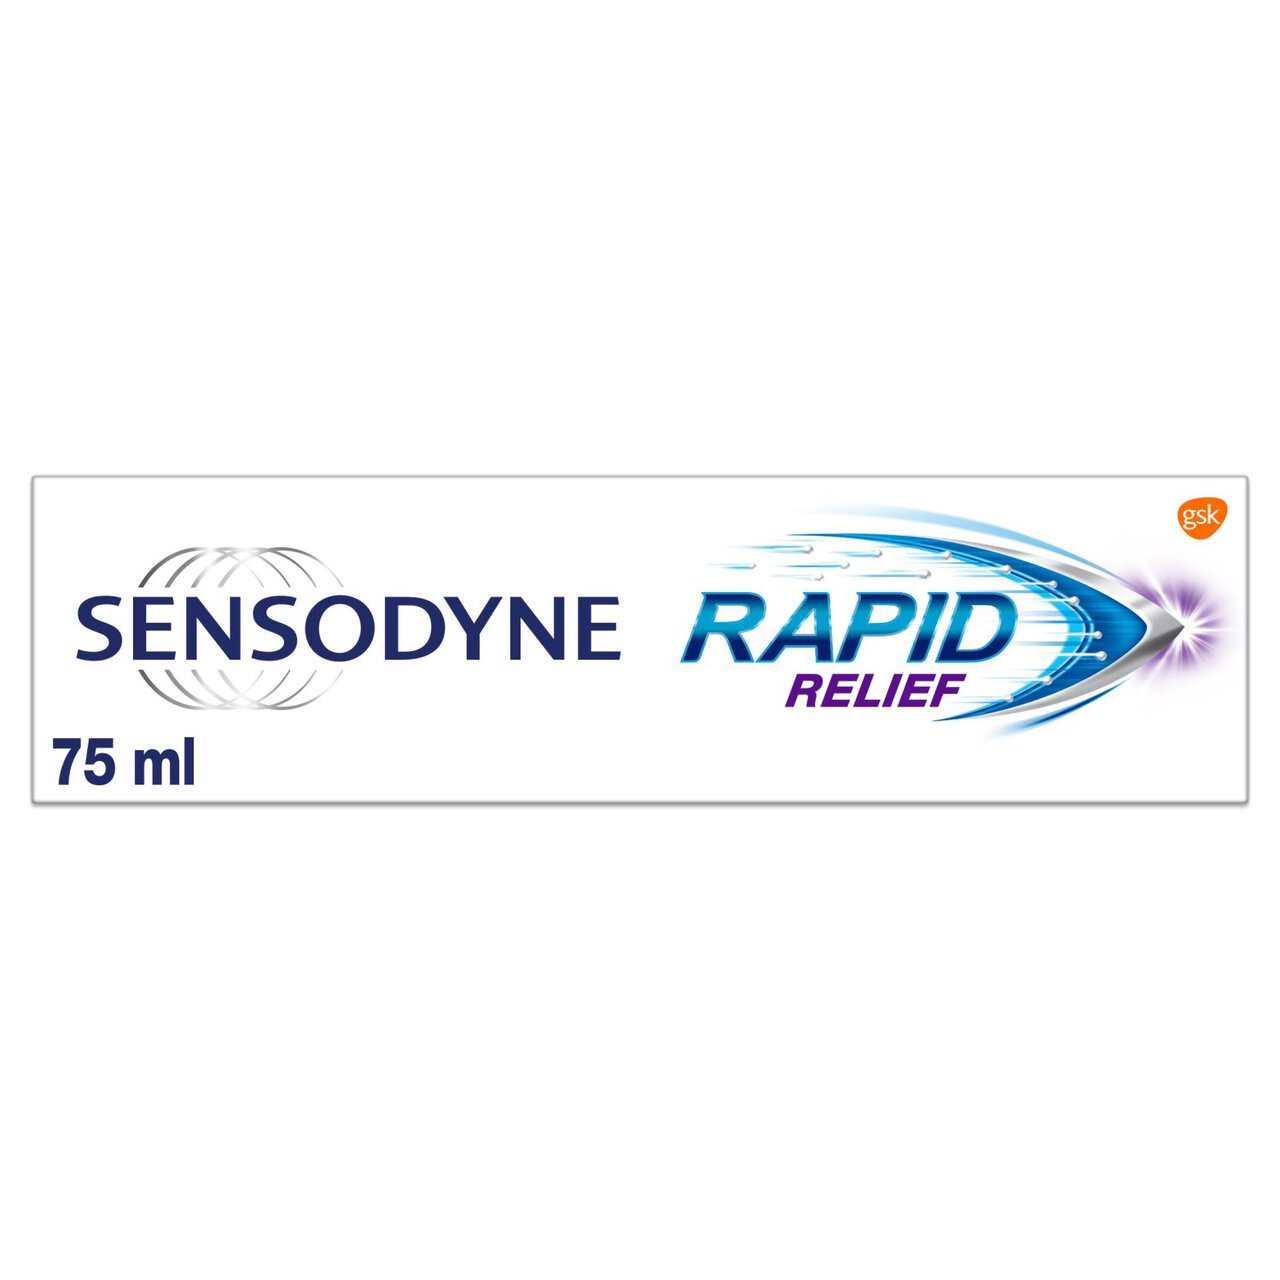 Sensodyne Rapid Relief Original Sensitive Toothpaste 75ml